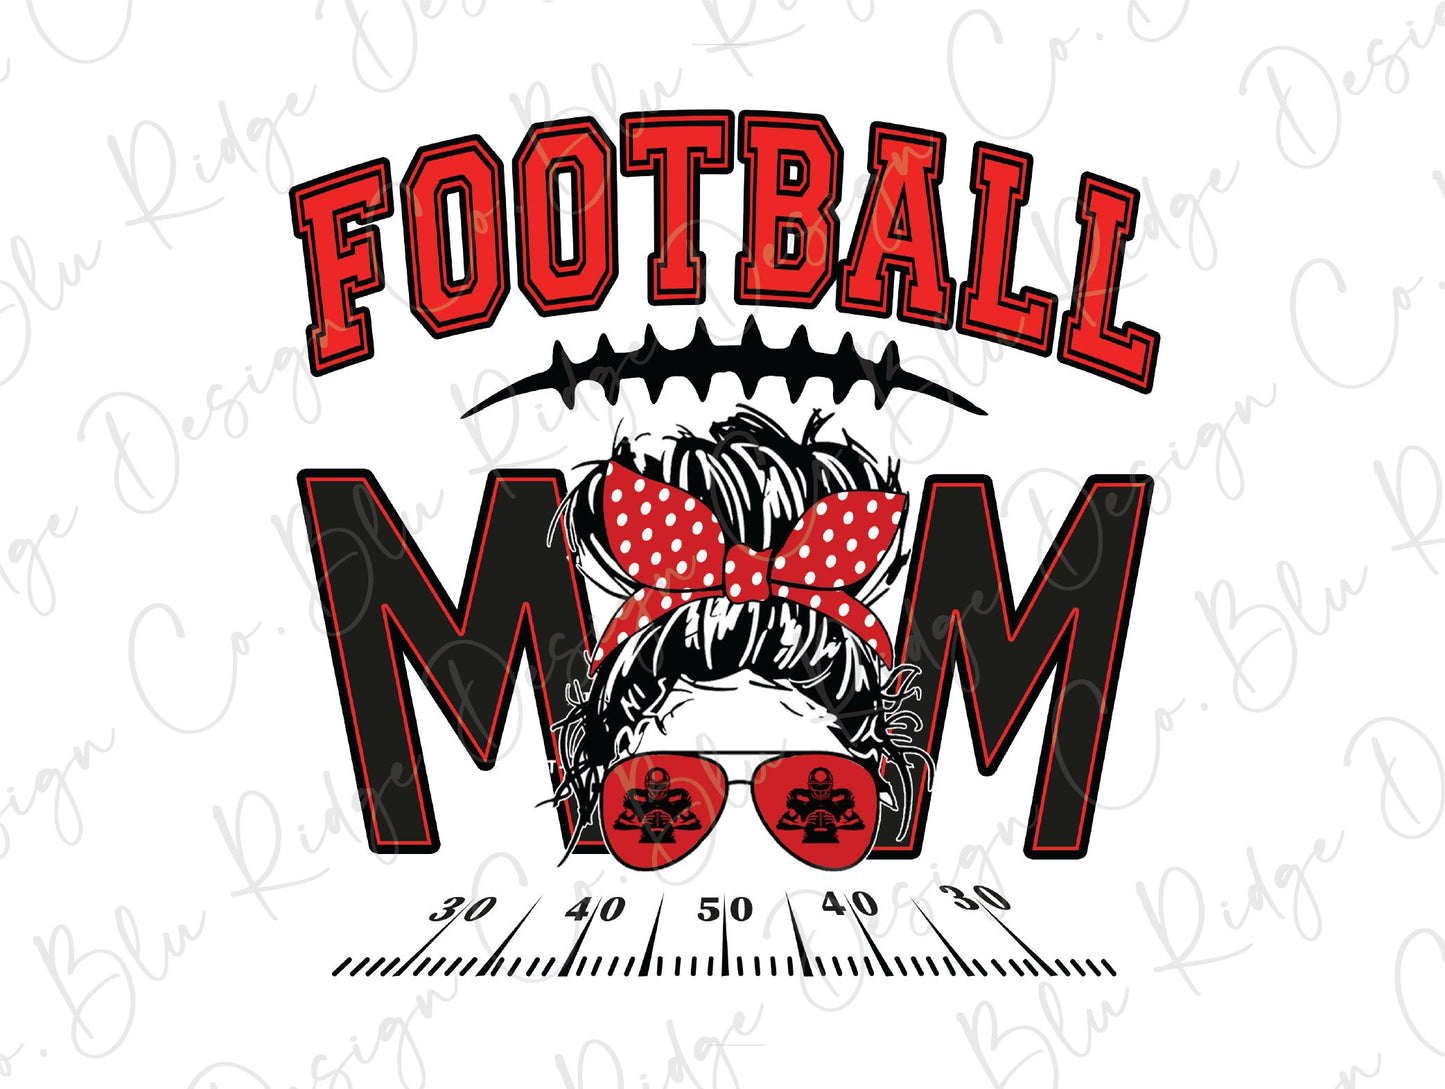 Football Mom 50 yard Line Messy Bun Direct To Film (DTF) Transfer